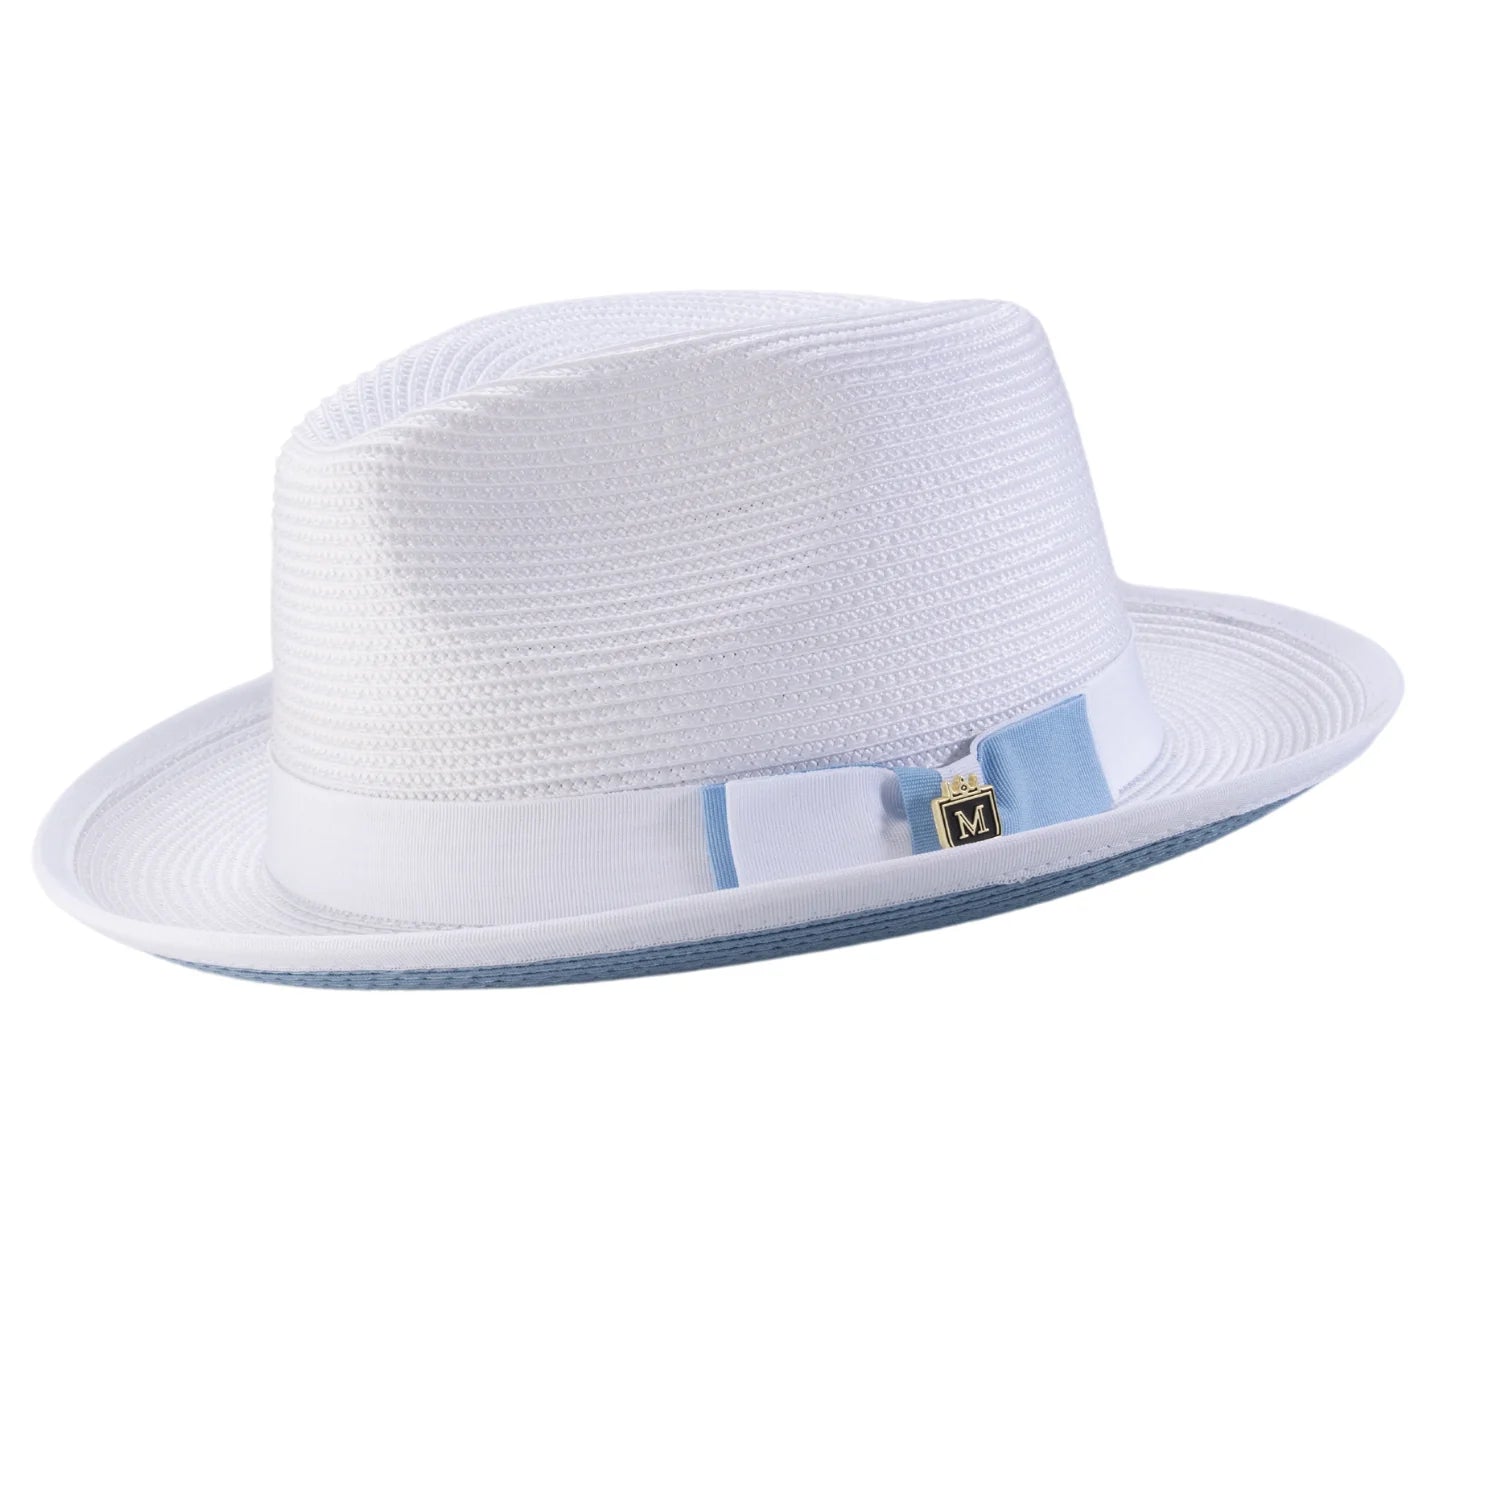 Braided Stingy Brim Pinch Fedora Hat - White with Carolina Bottom